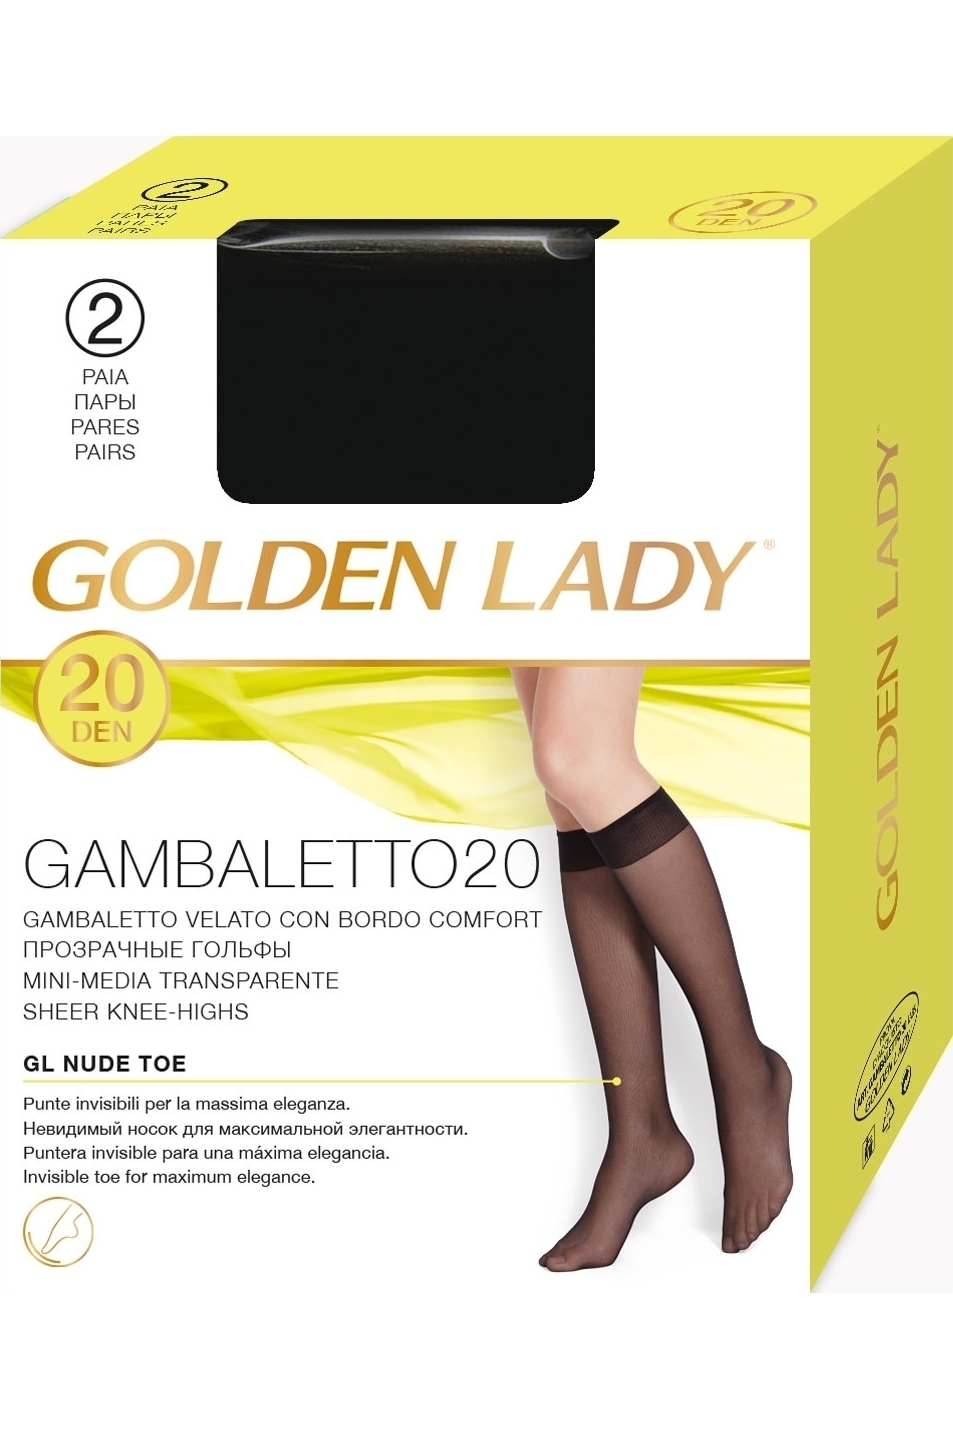 GOLDEN LADY Gambaletto 20